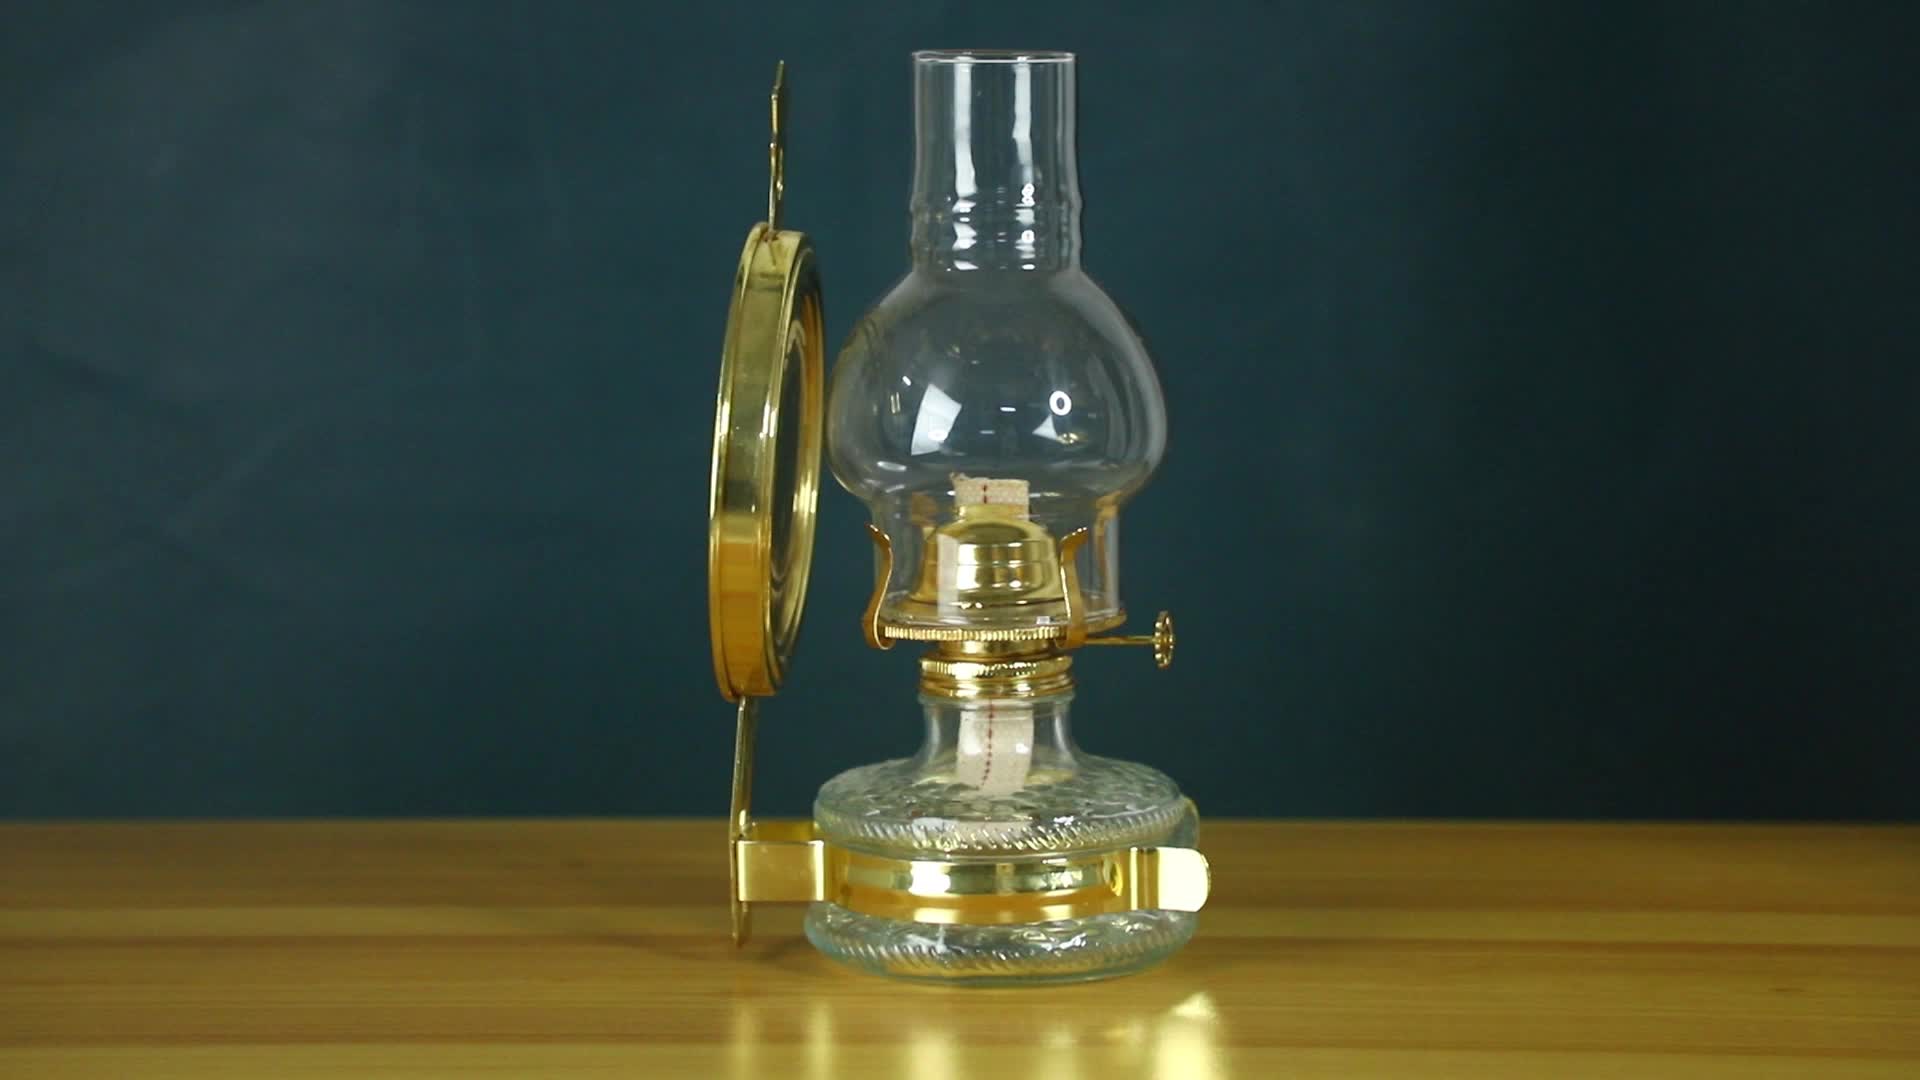 Spuik Large Oil Lamp Rustic Oil Lamps for Indoor Use Warm Home Mood Decor  Lighting Kerosene Lamp Chamber Oil Lamp Lantern Classic Vintage Hurricane